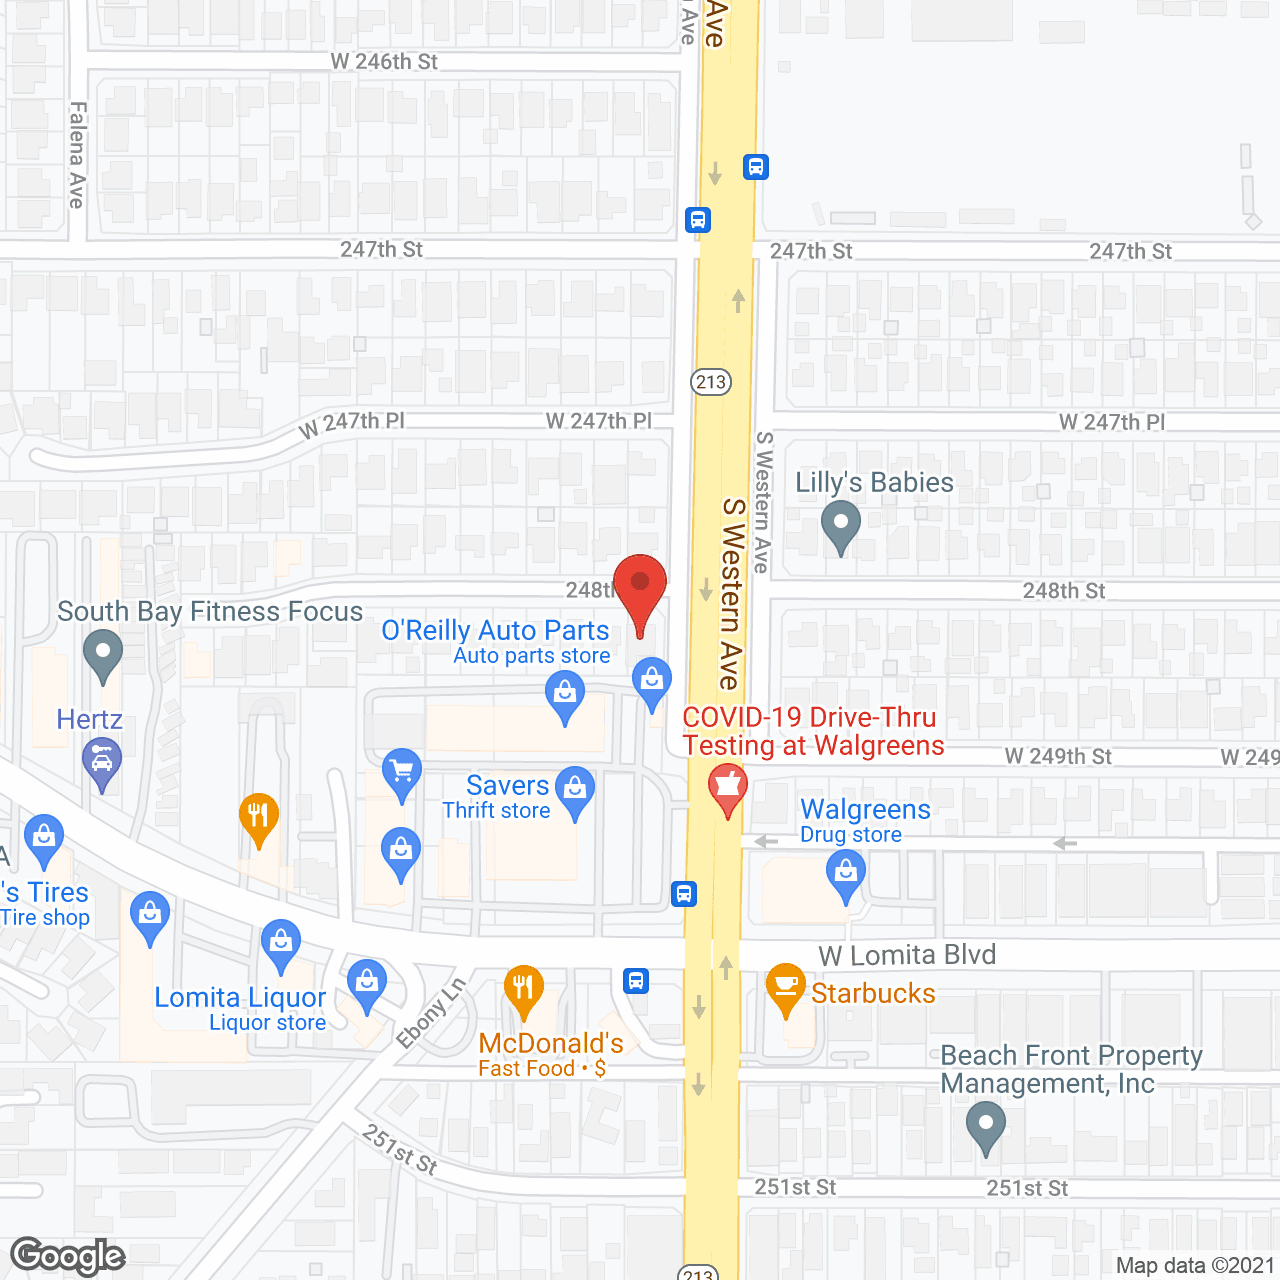 TLC Guest Home in google map